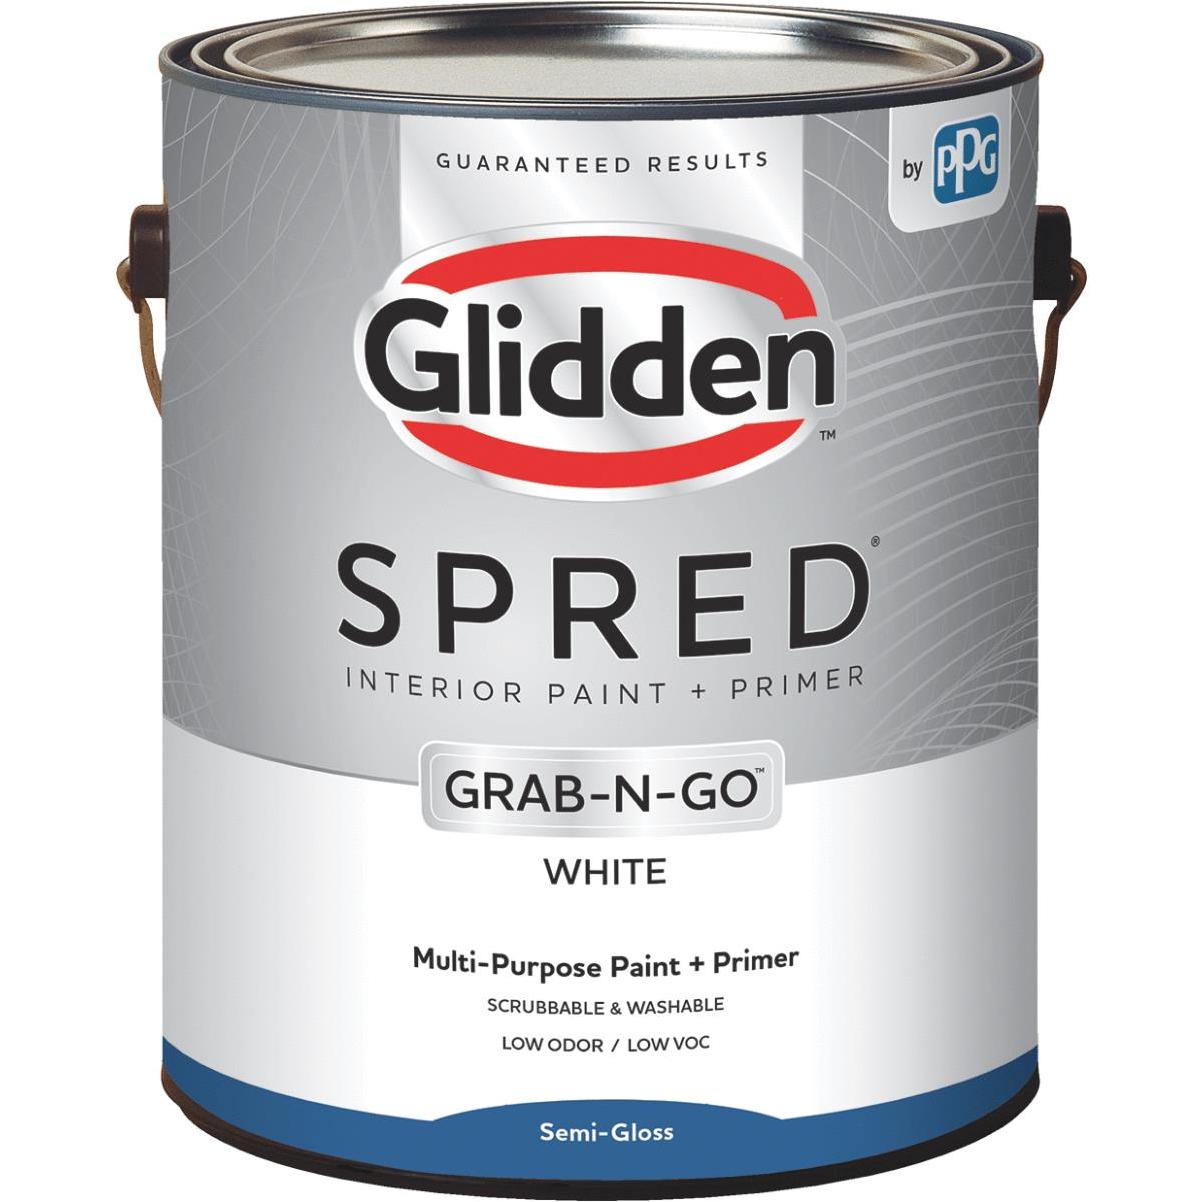 Pintura interior Glidden Spred + imprimador Grab-n-go blanco semibrillante 1 galón